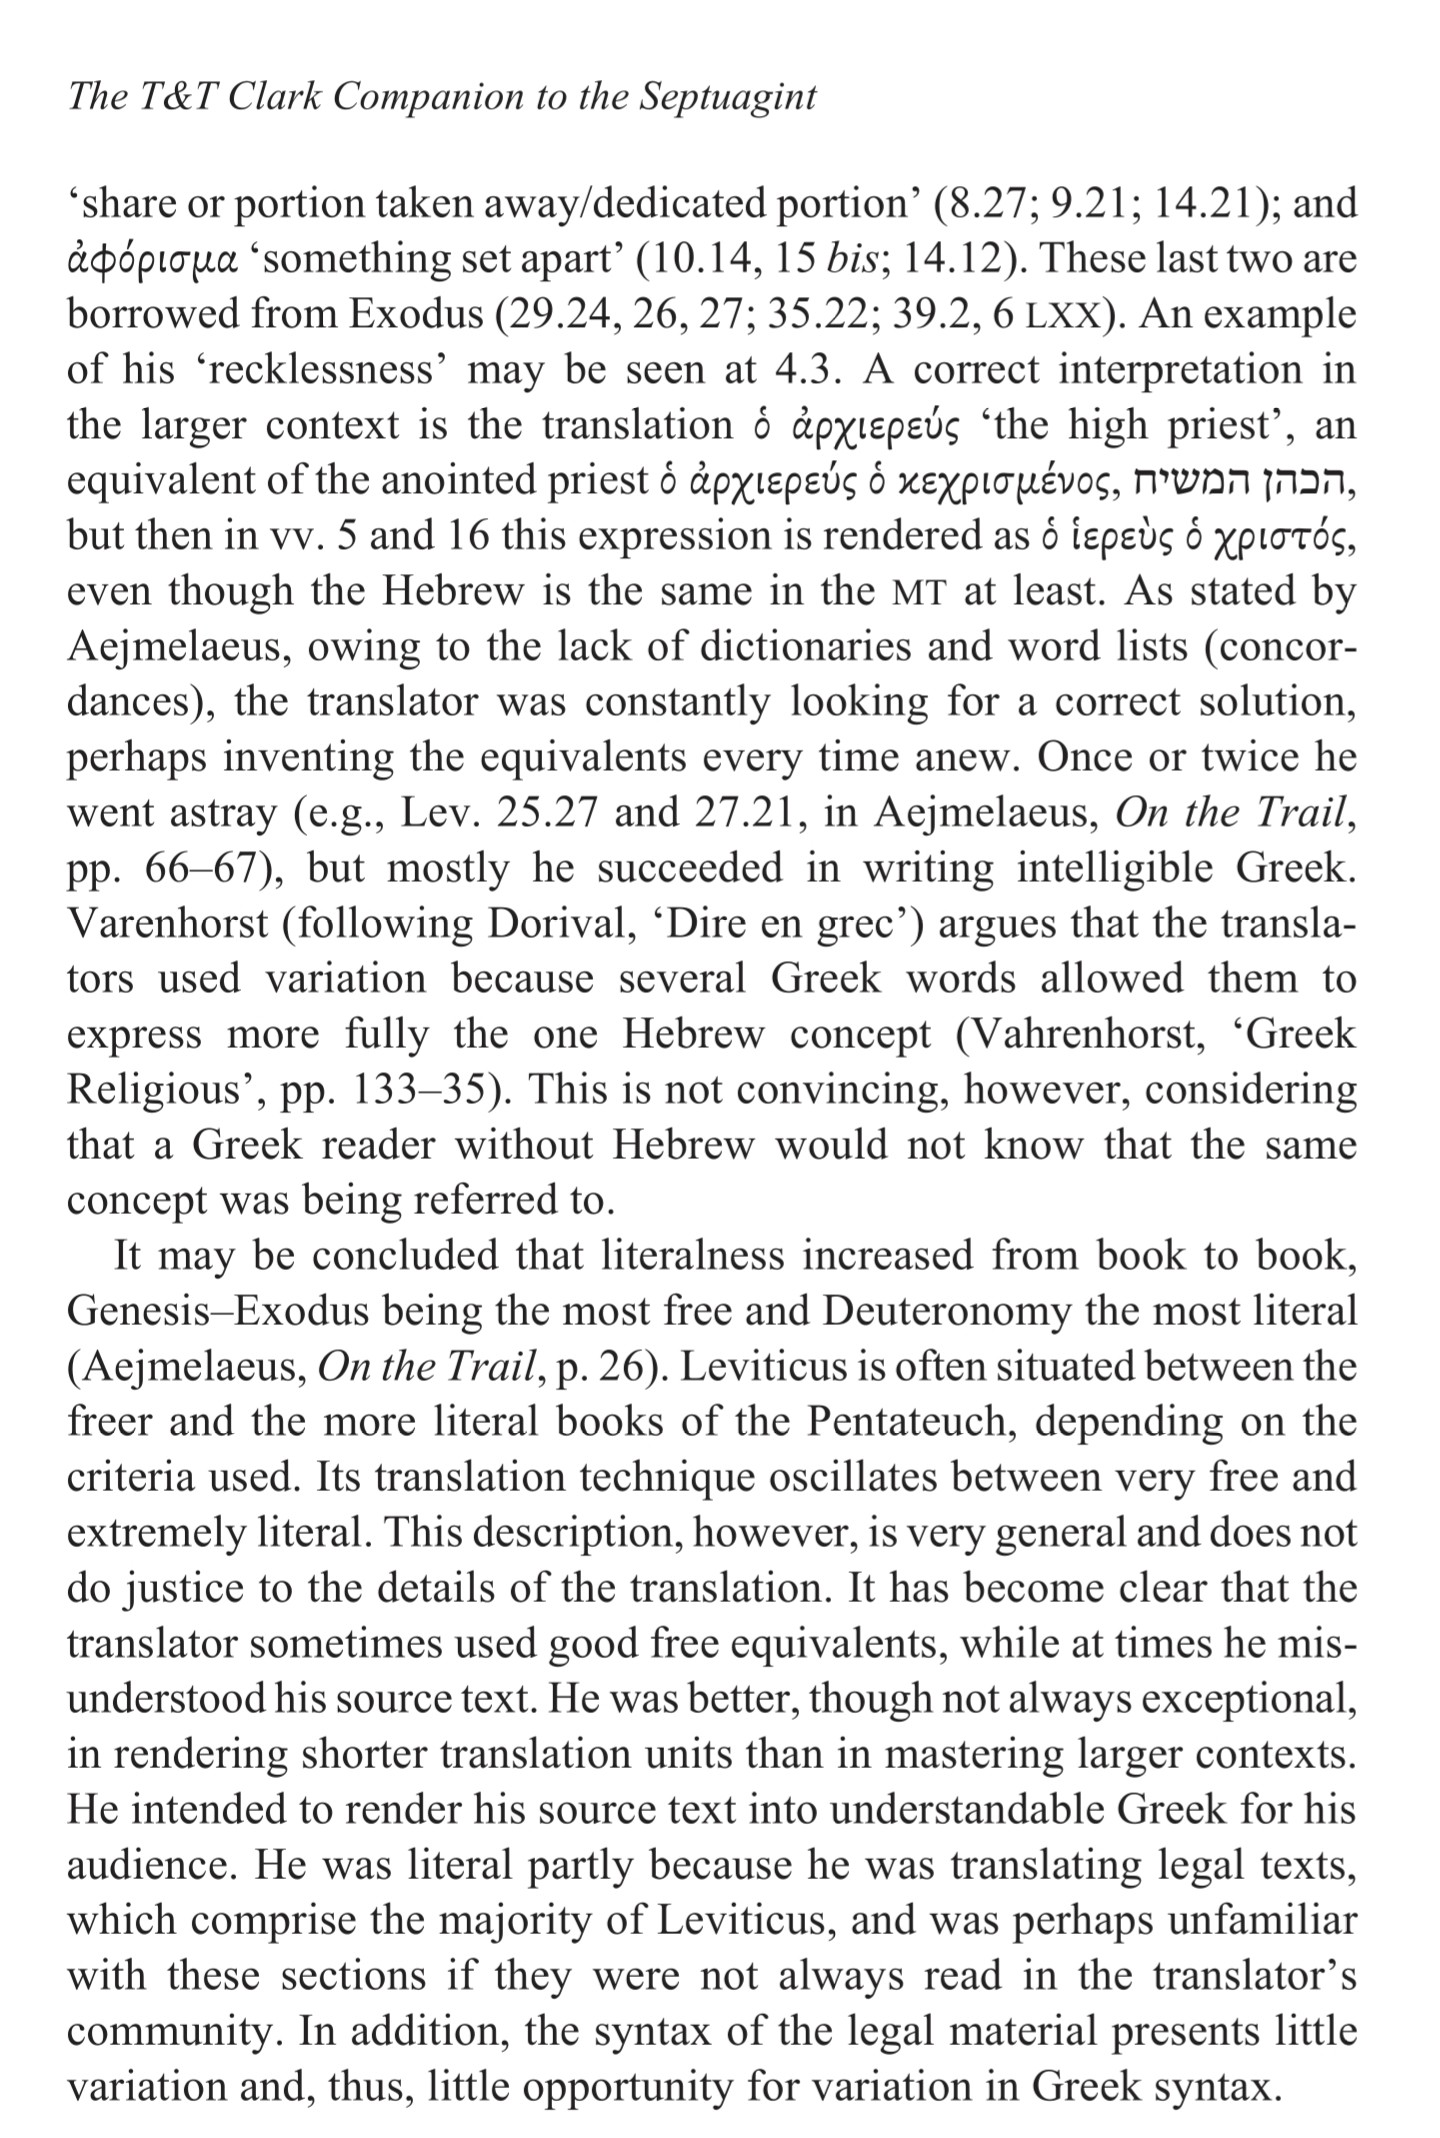 Septuagint_Synonyms-HighPriest.jpg